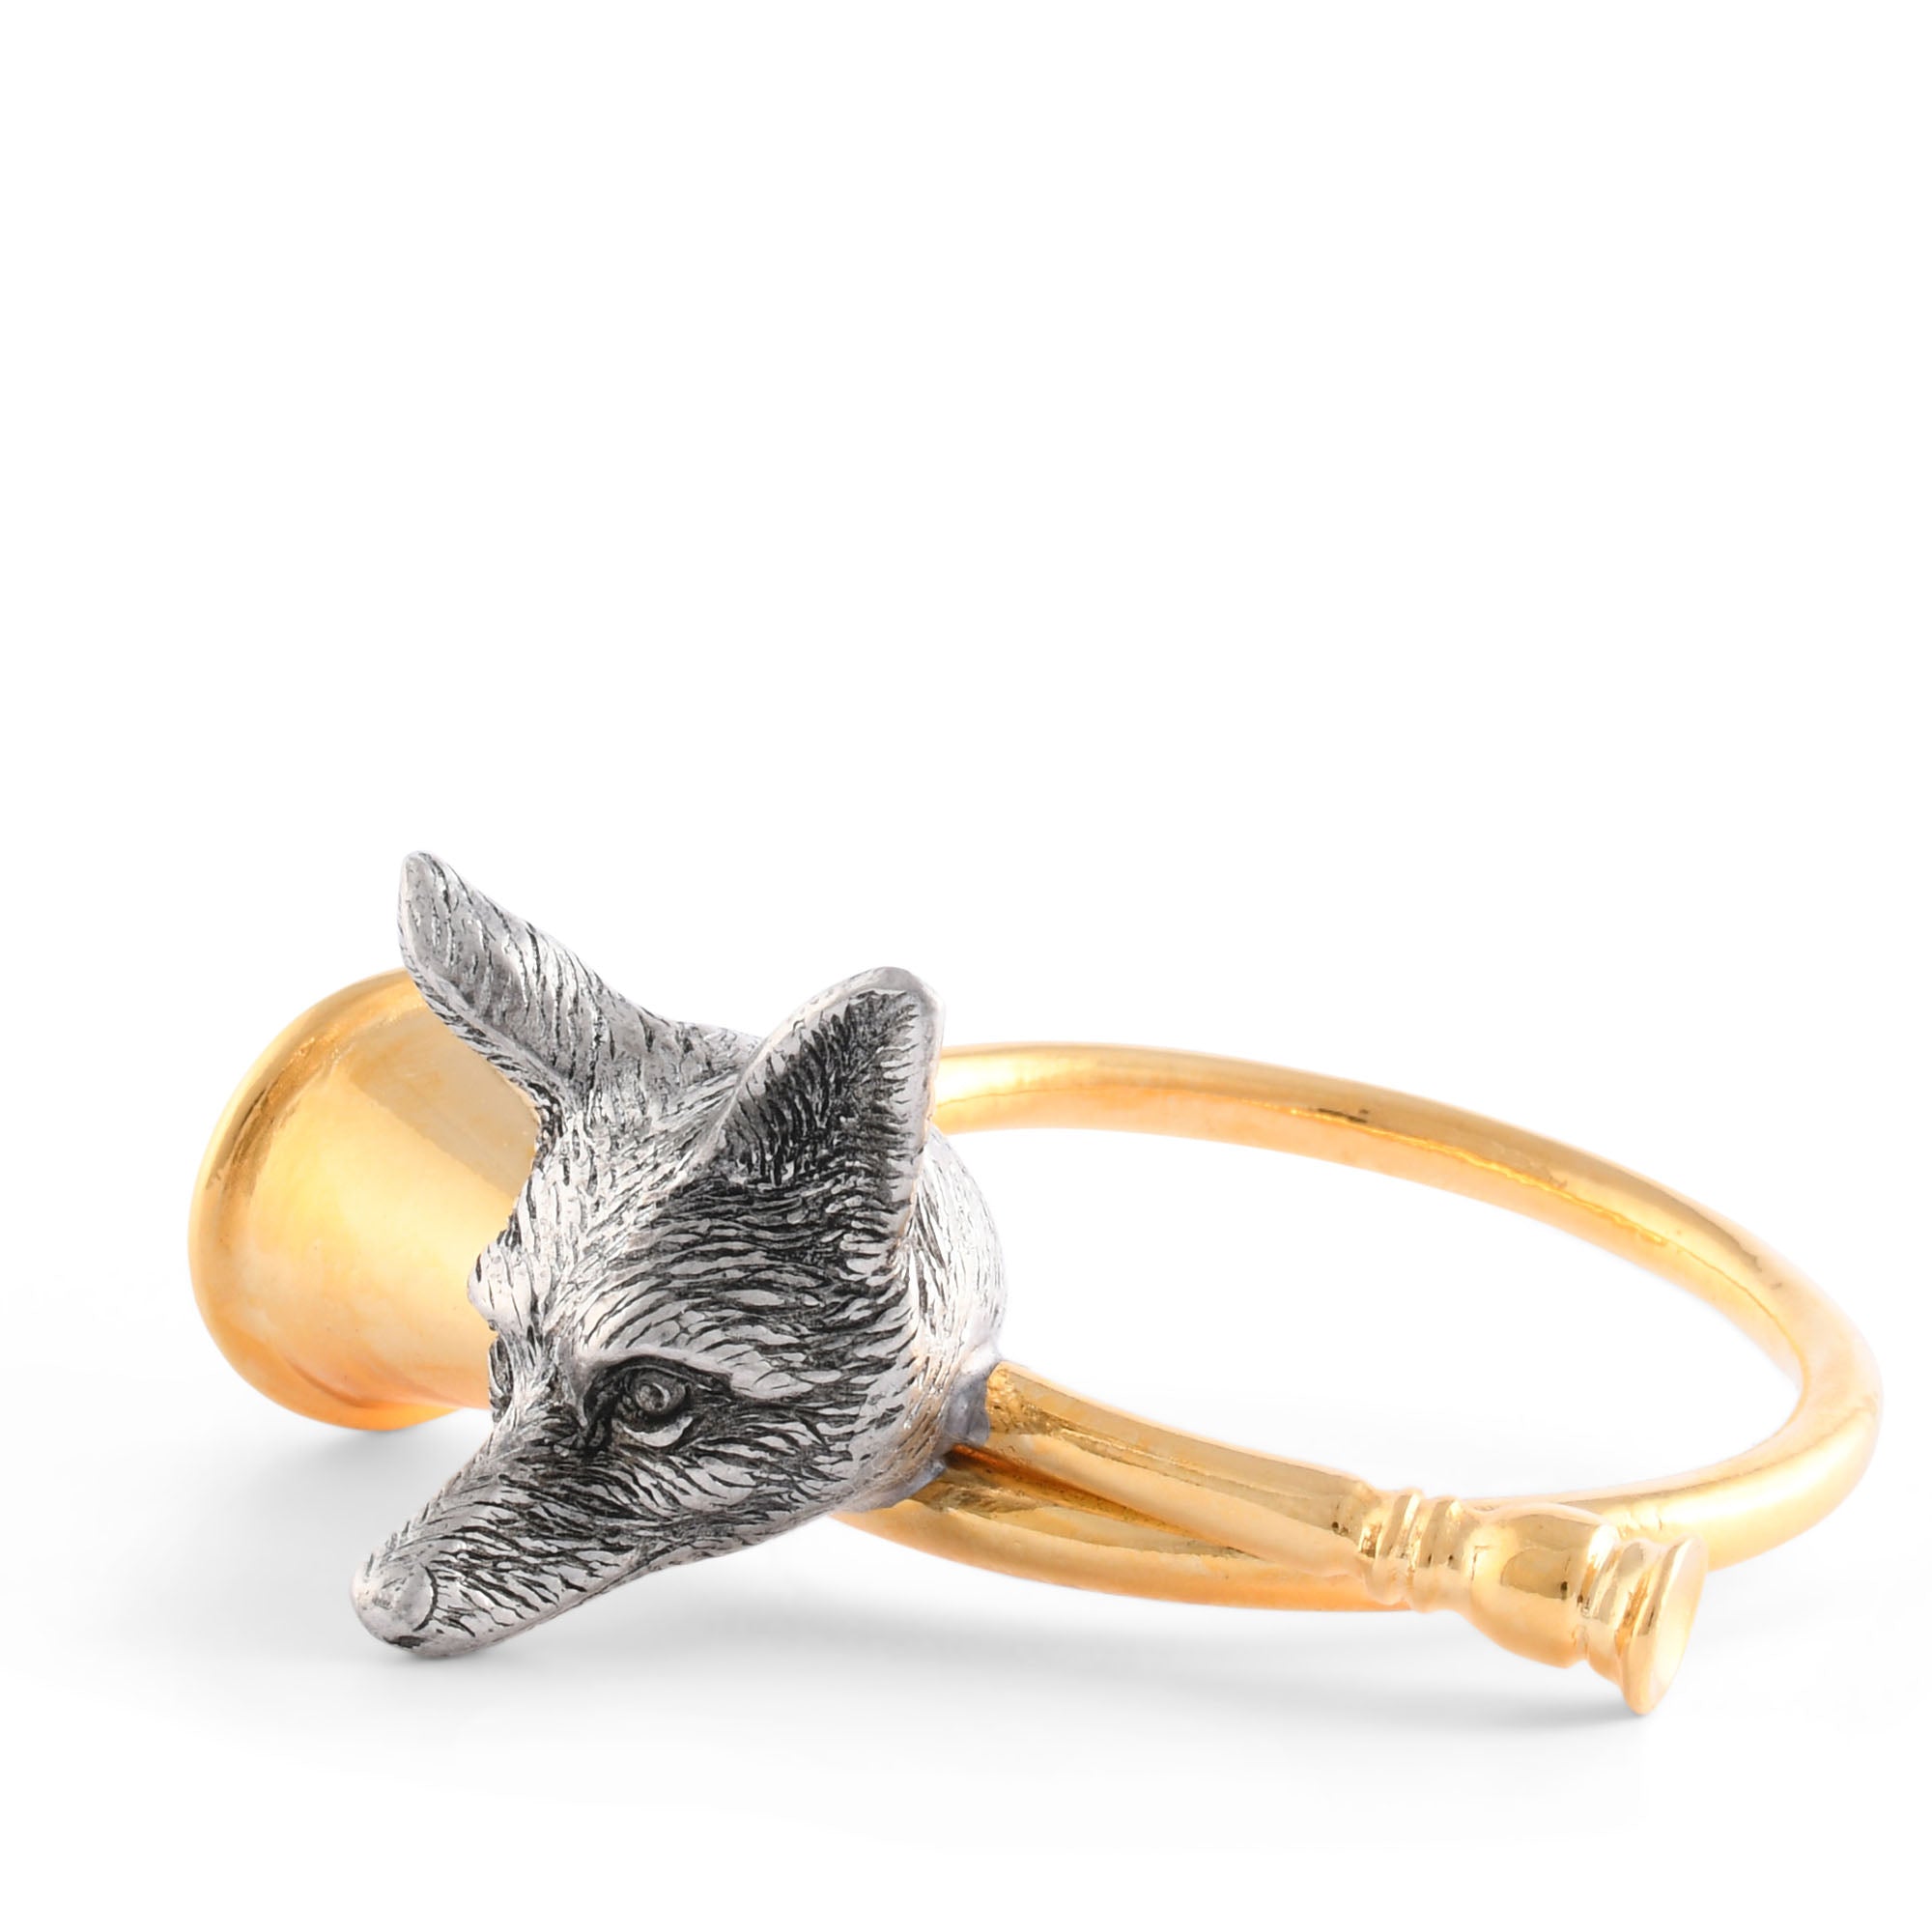 Vagabond House Golden Hunt Horn Napkin Ring Product Image